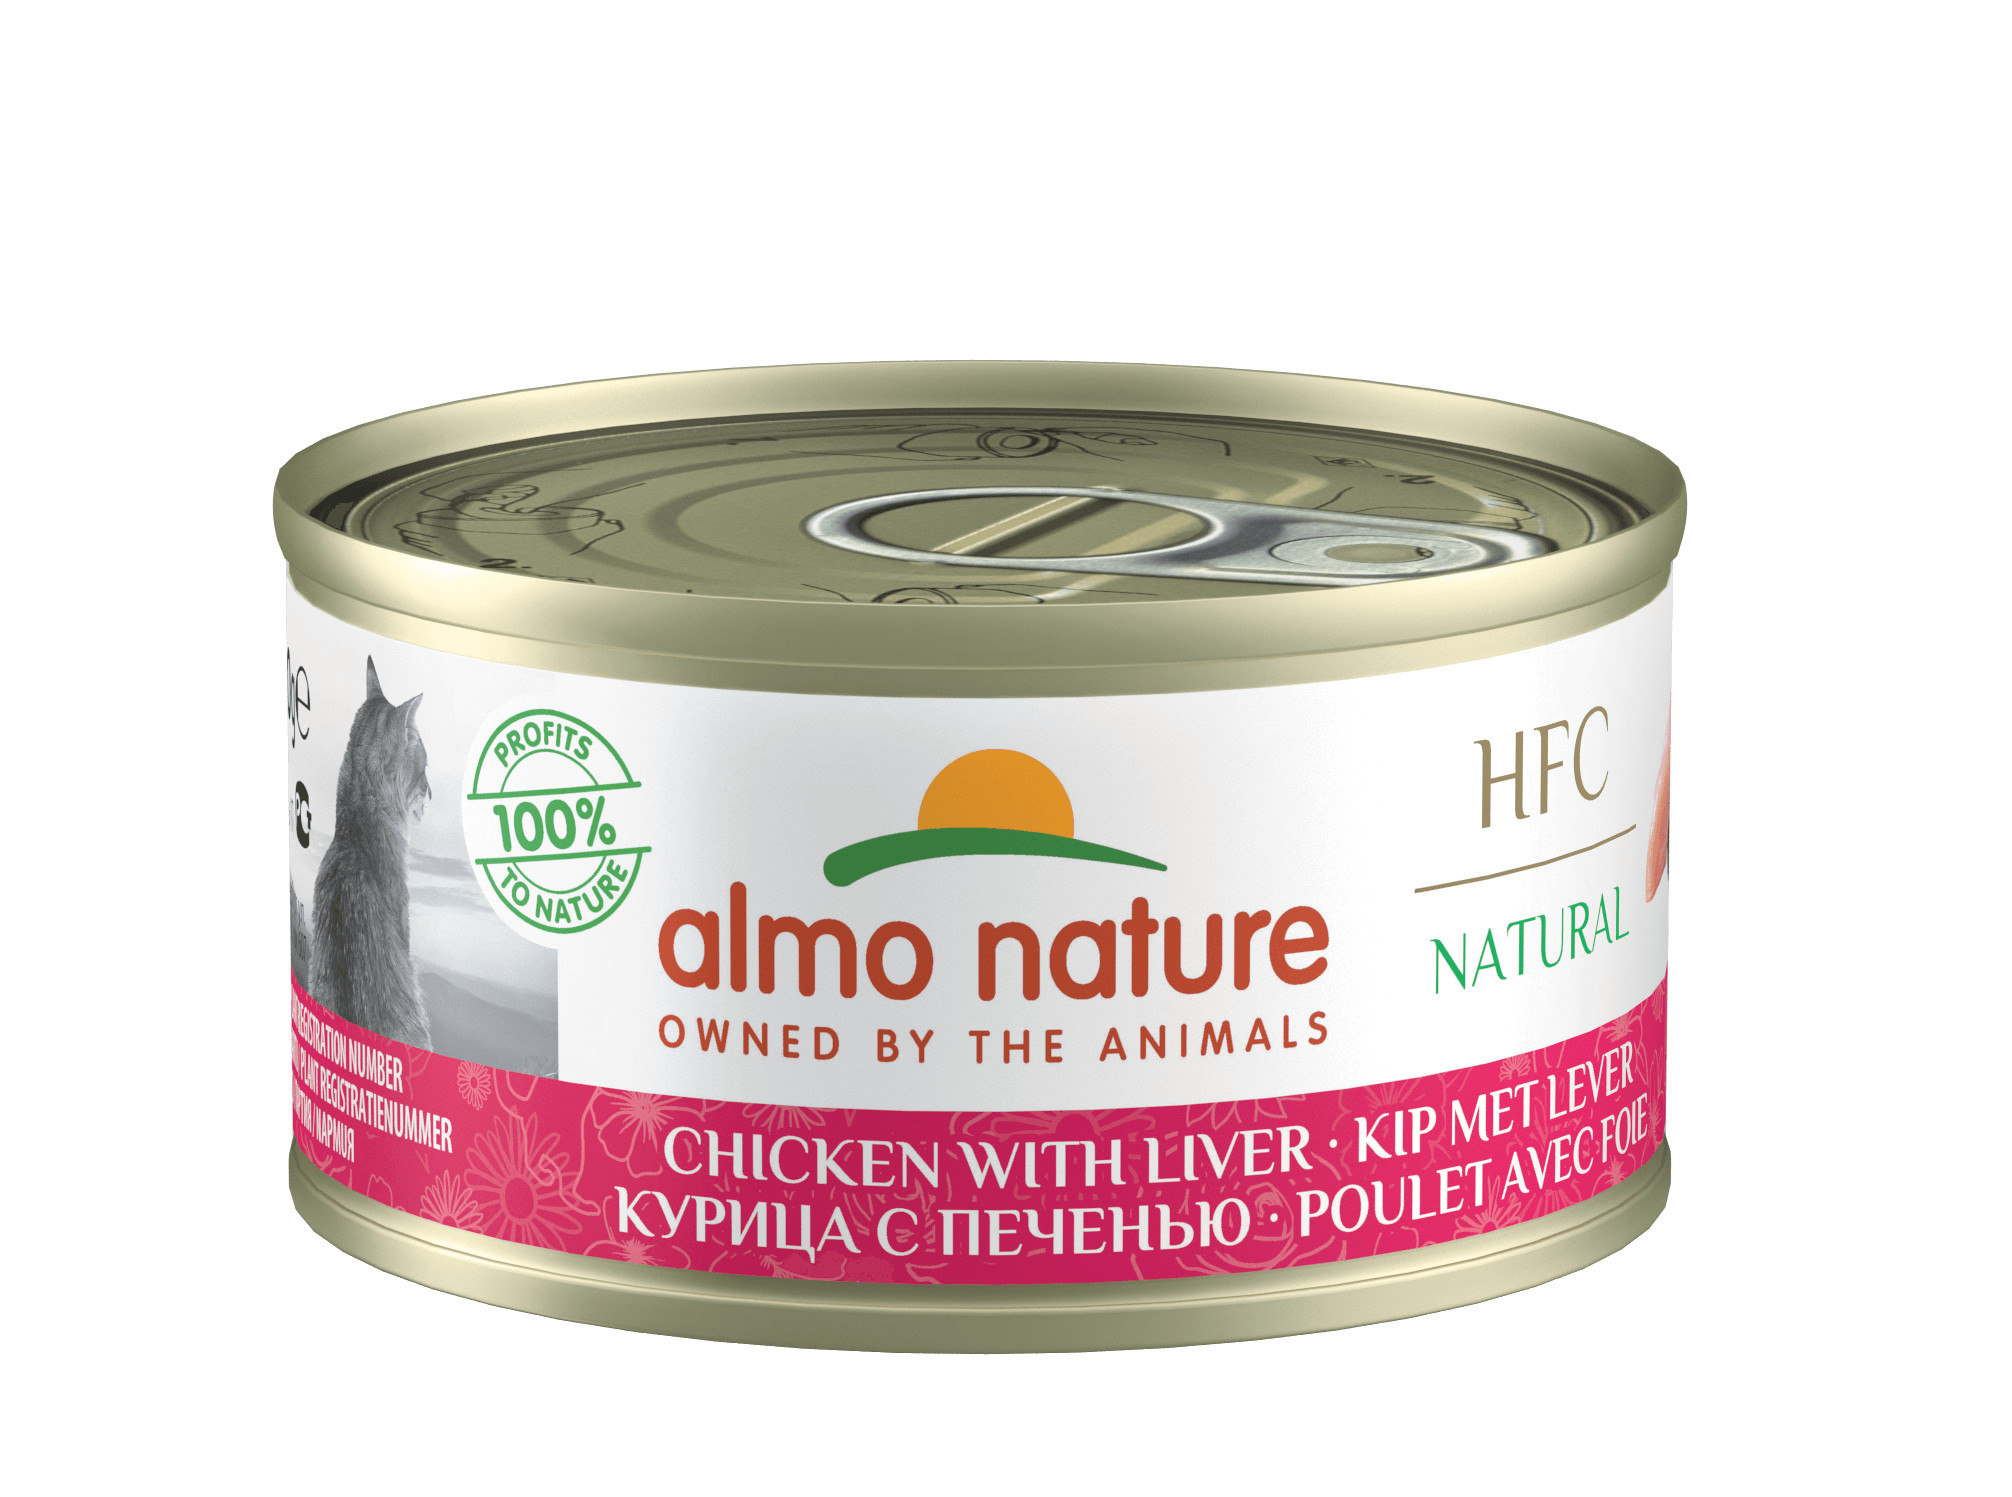 Almo Nature HFC Natural kylling & lever 70 gram